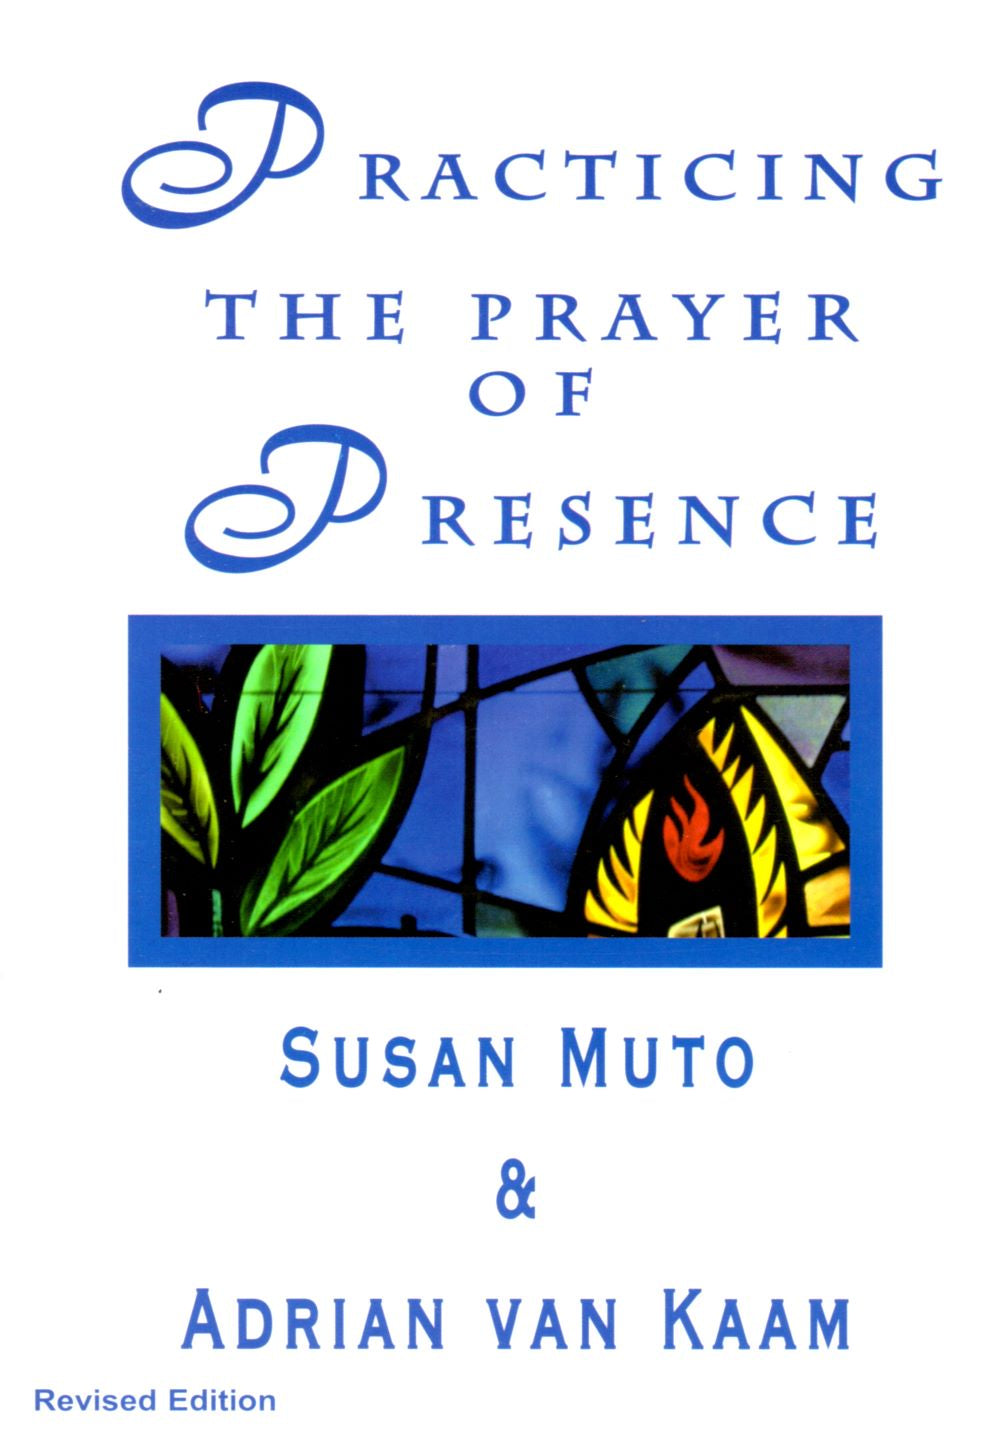 Practicing the Prayer of Presence (1993)